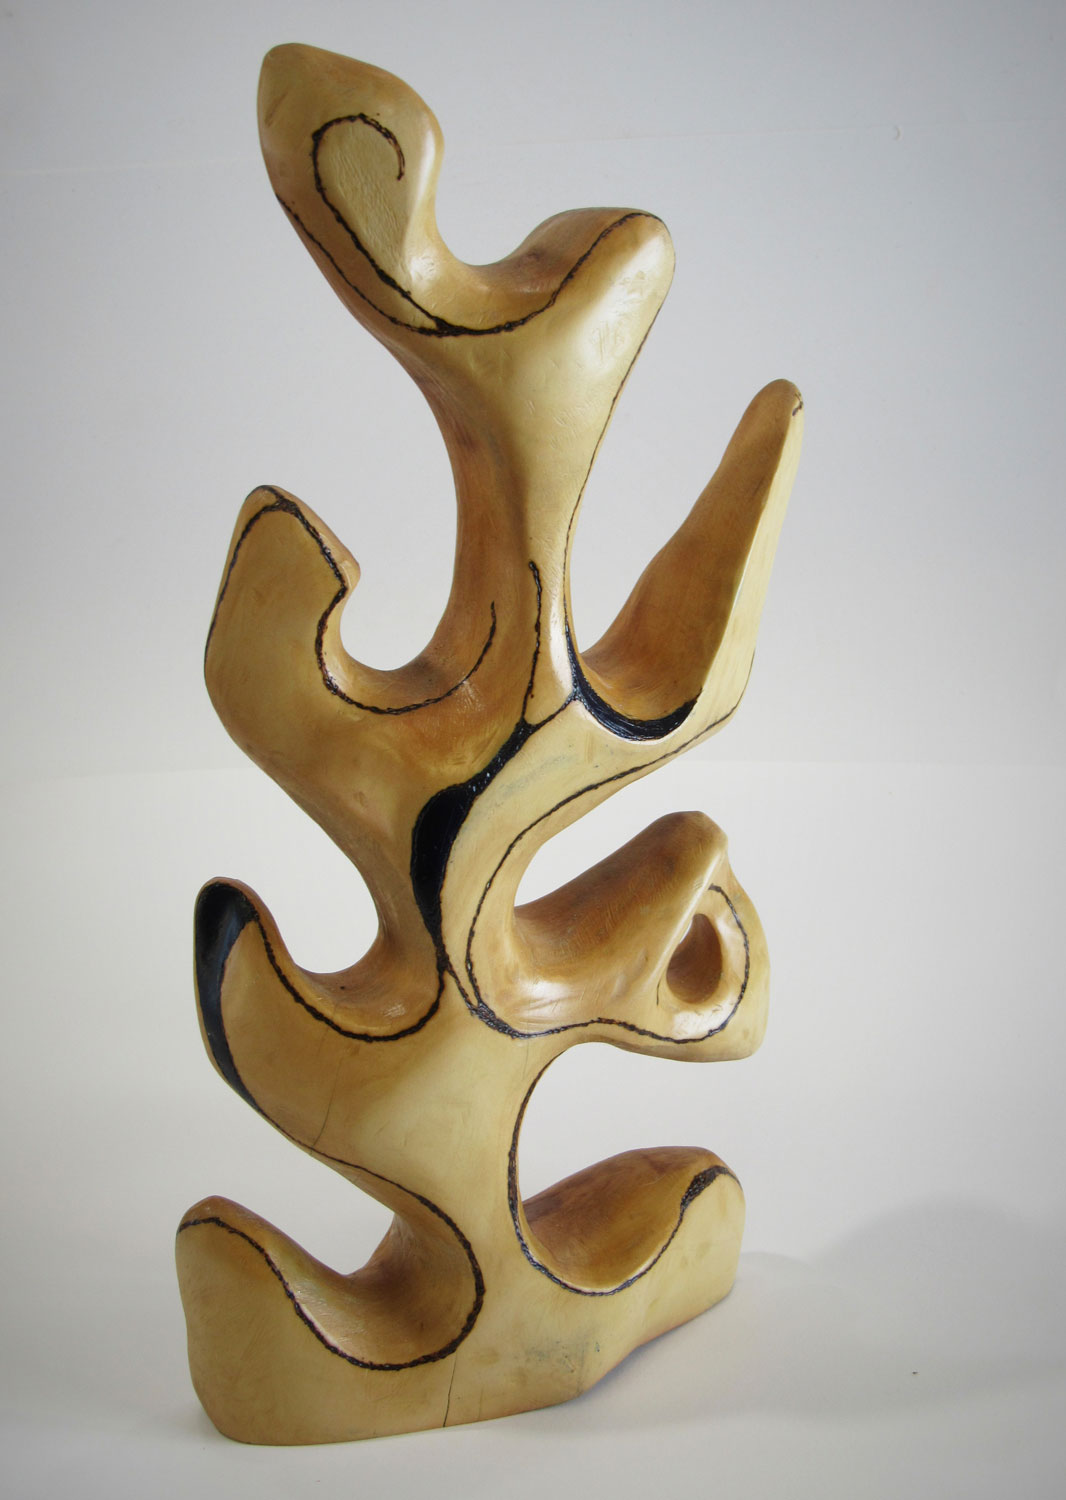  Wood Sculpture by Mike Laflin